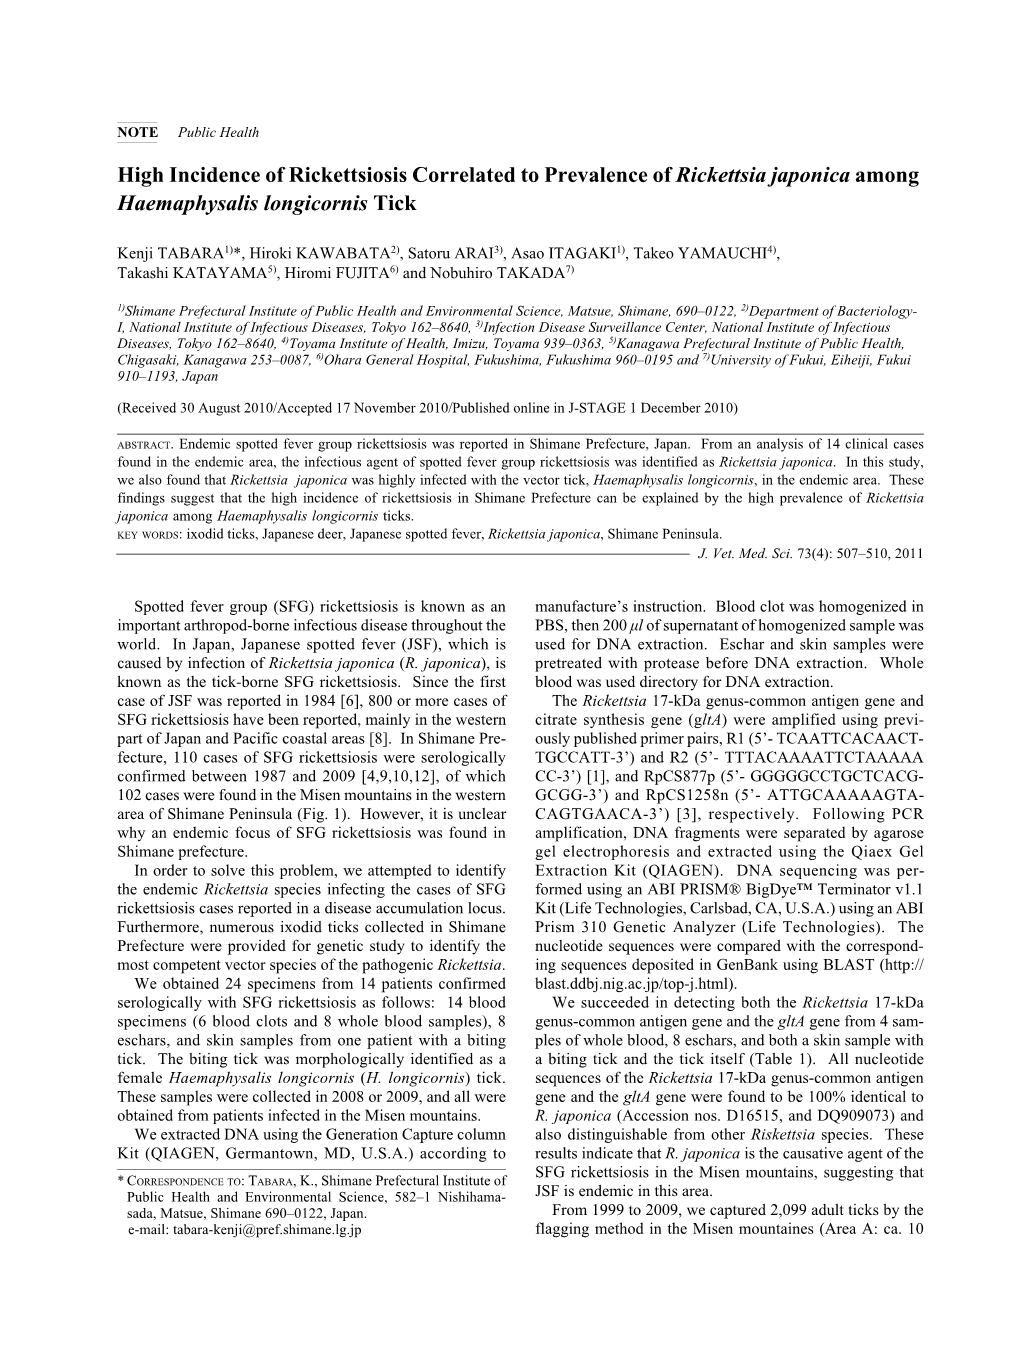 High Incidence of Rickettsiosis Correlated to Prevalence of Rickettsia Japonica Among Haemaphysalis Longicornis Tick